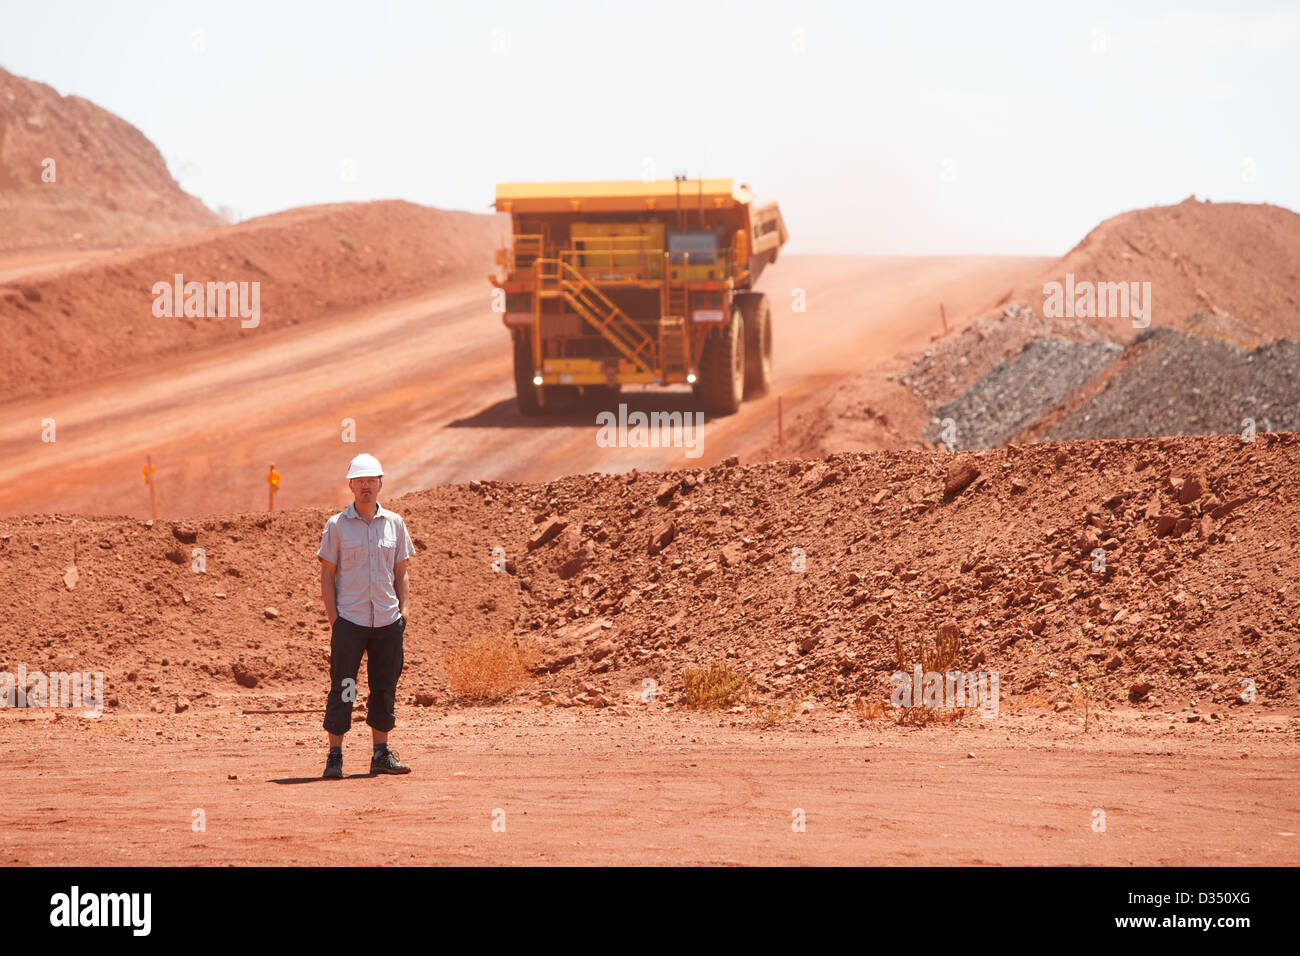 Mining truck working in iron ore mines, Western Australia Stock Photo